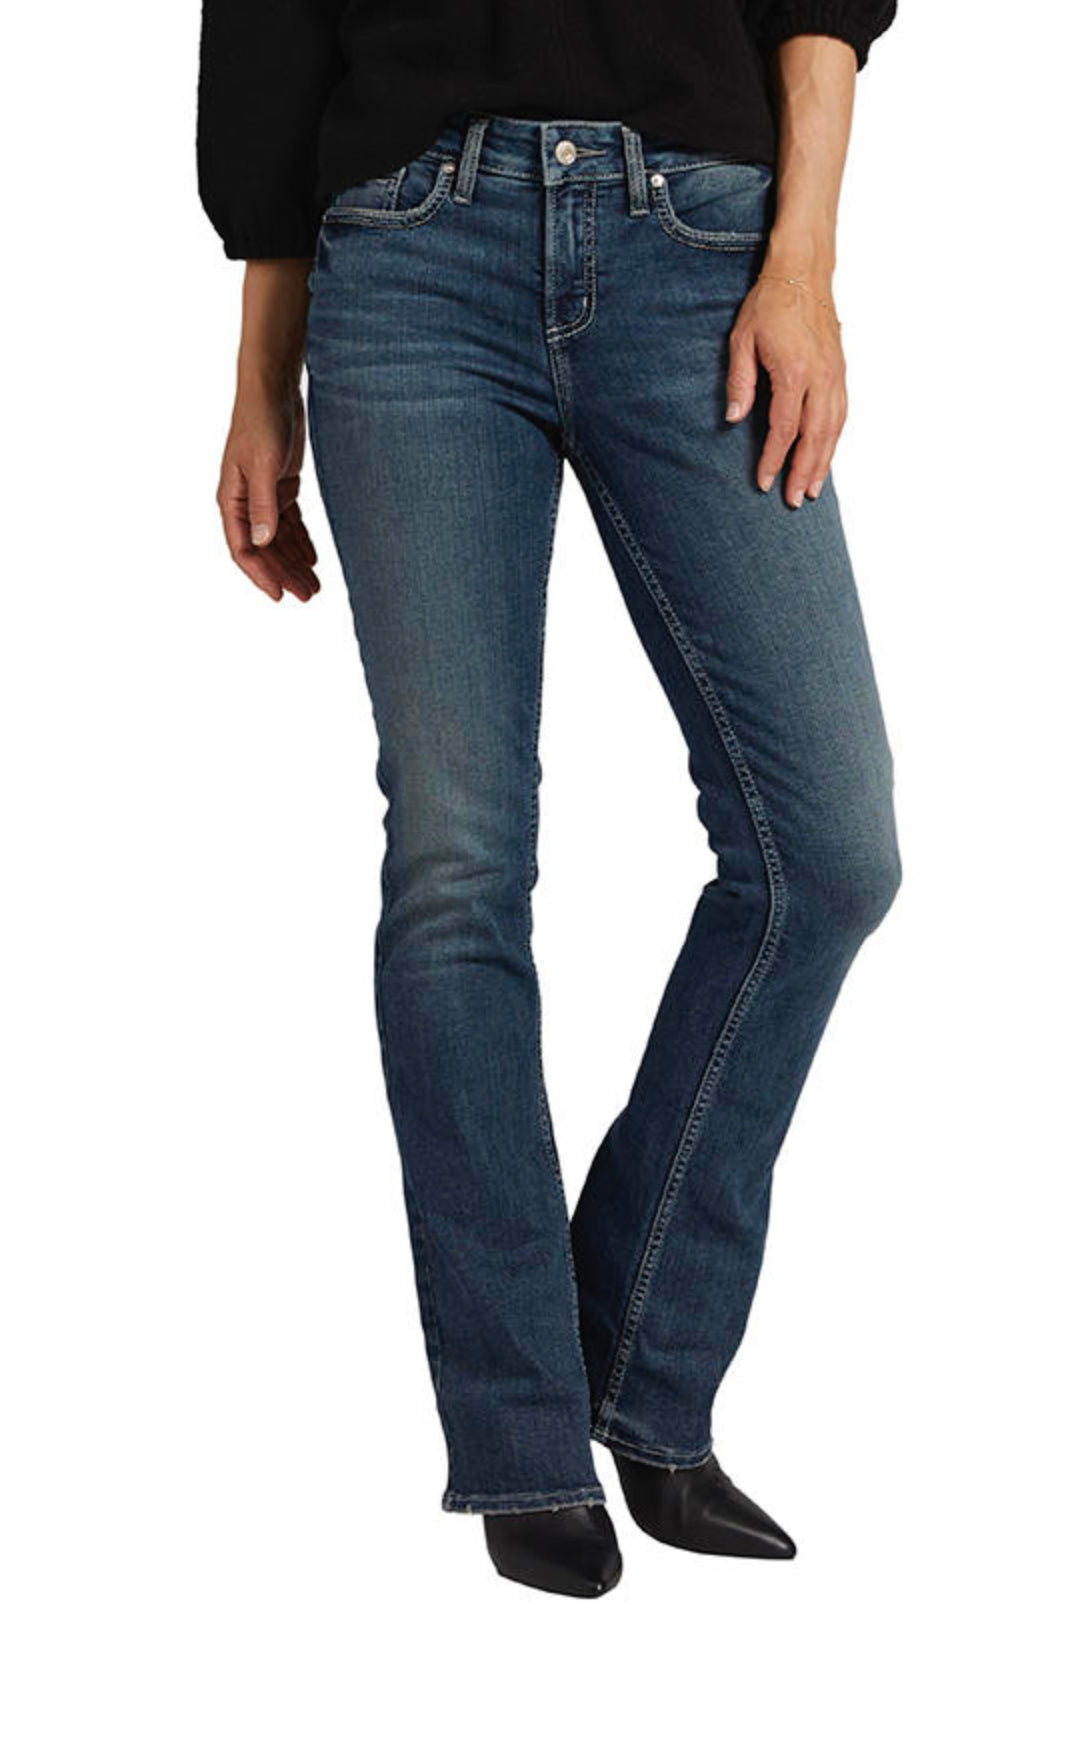 Silver Suki Bootcut Jean-Bootcut-Silver Jeans-Gallop 'n Glitz- Women's Western Wear Boutique, Located in Grants Pass, Oregon